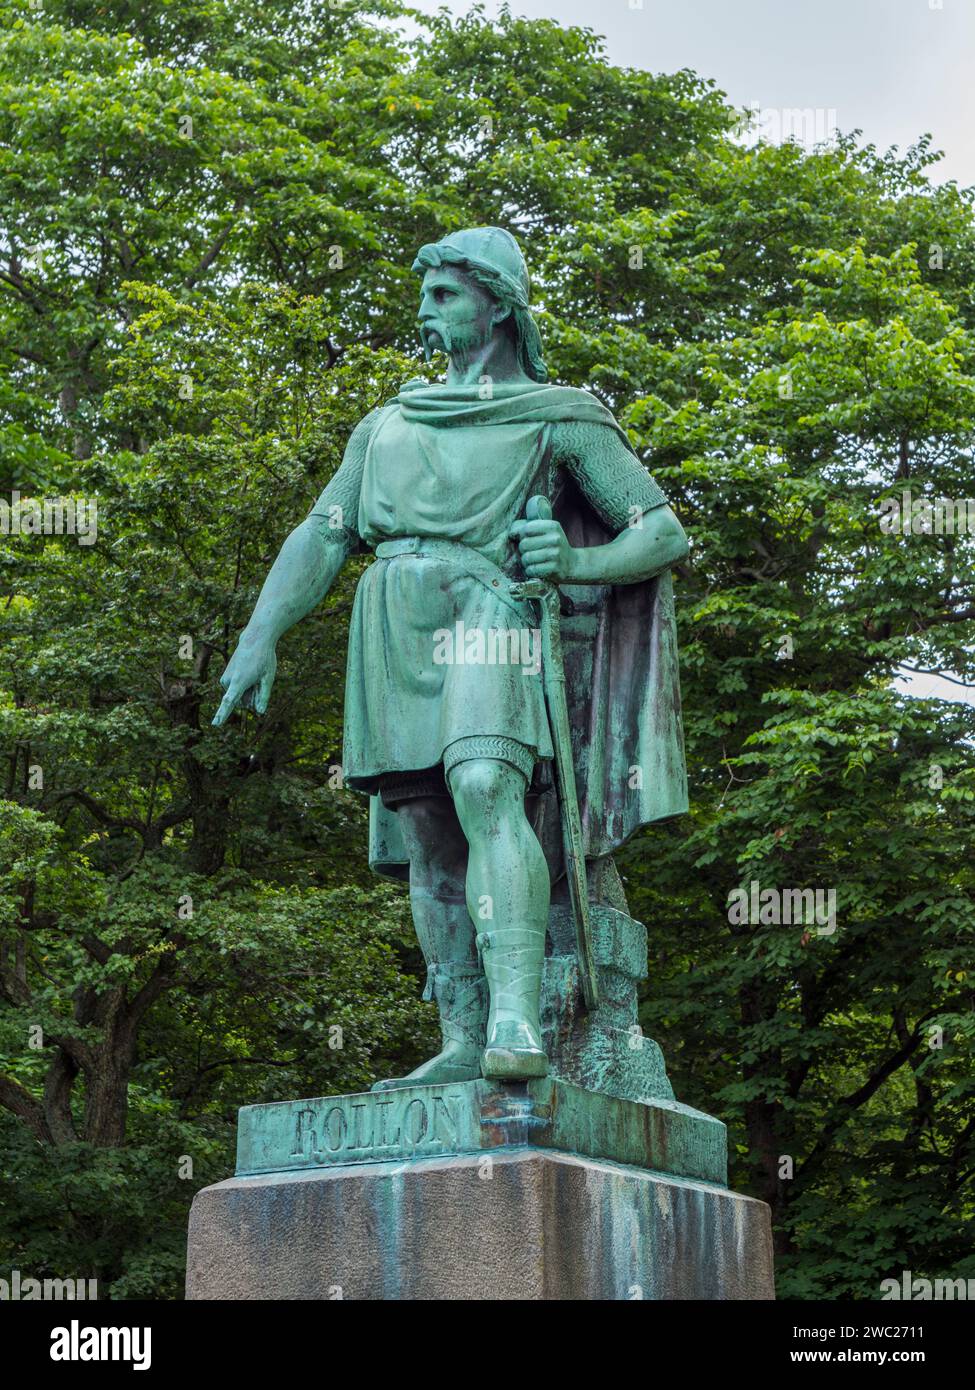 Rollo der Wikinger (Wikinger Gange-Rolf) Statue von Aimé Millet in Ålesund, Møre og Romsdal County, Norwegen. Stockfoto